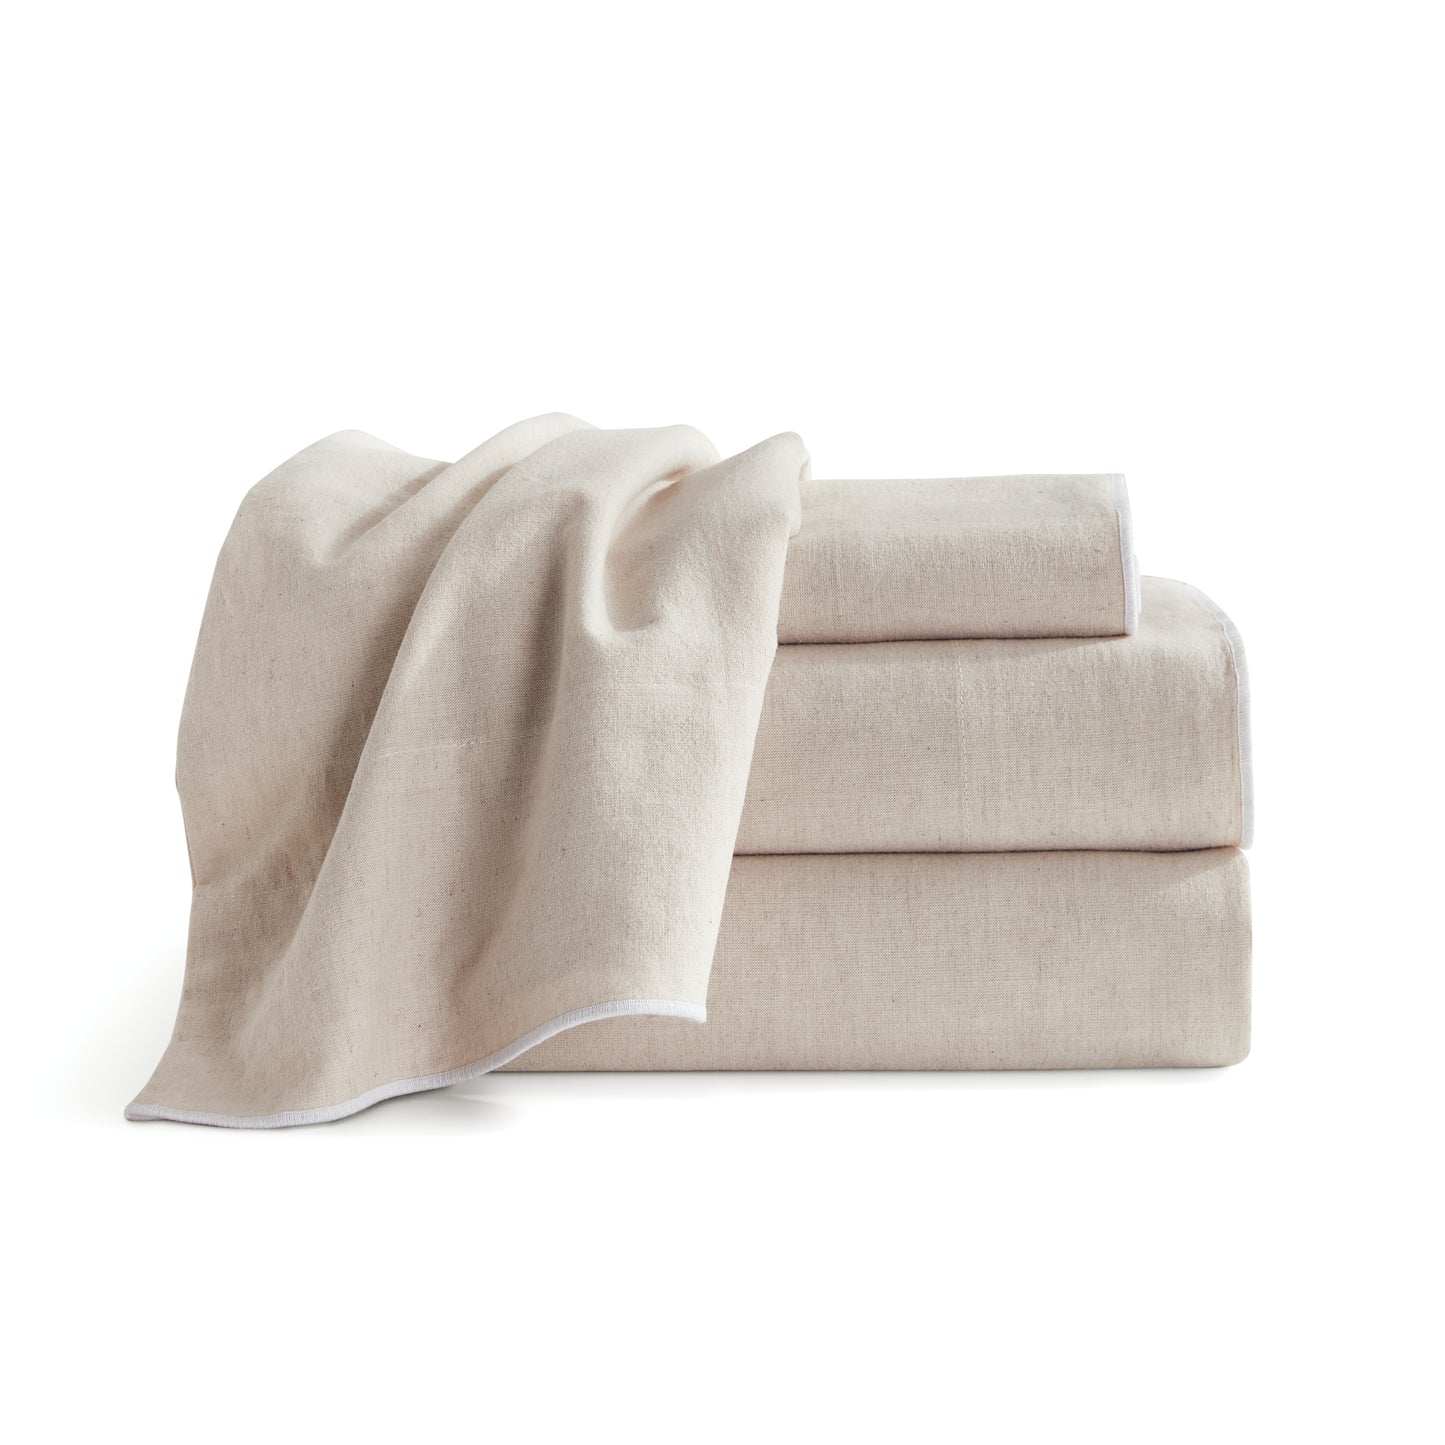 DKNY Pure Washed Linen Sheet Set